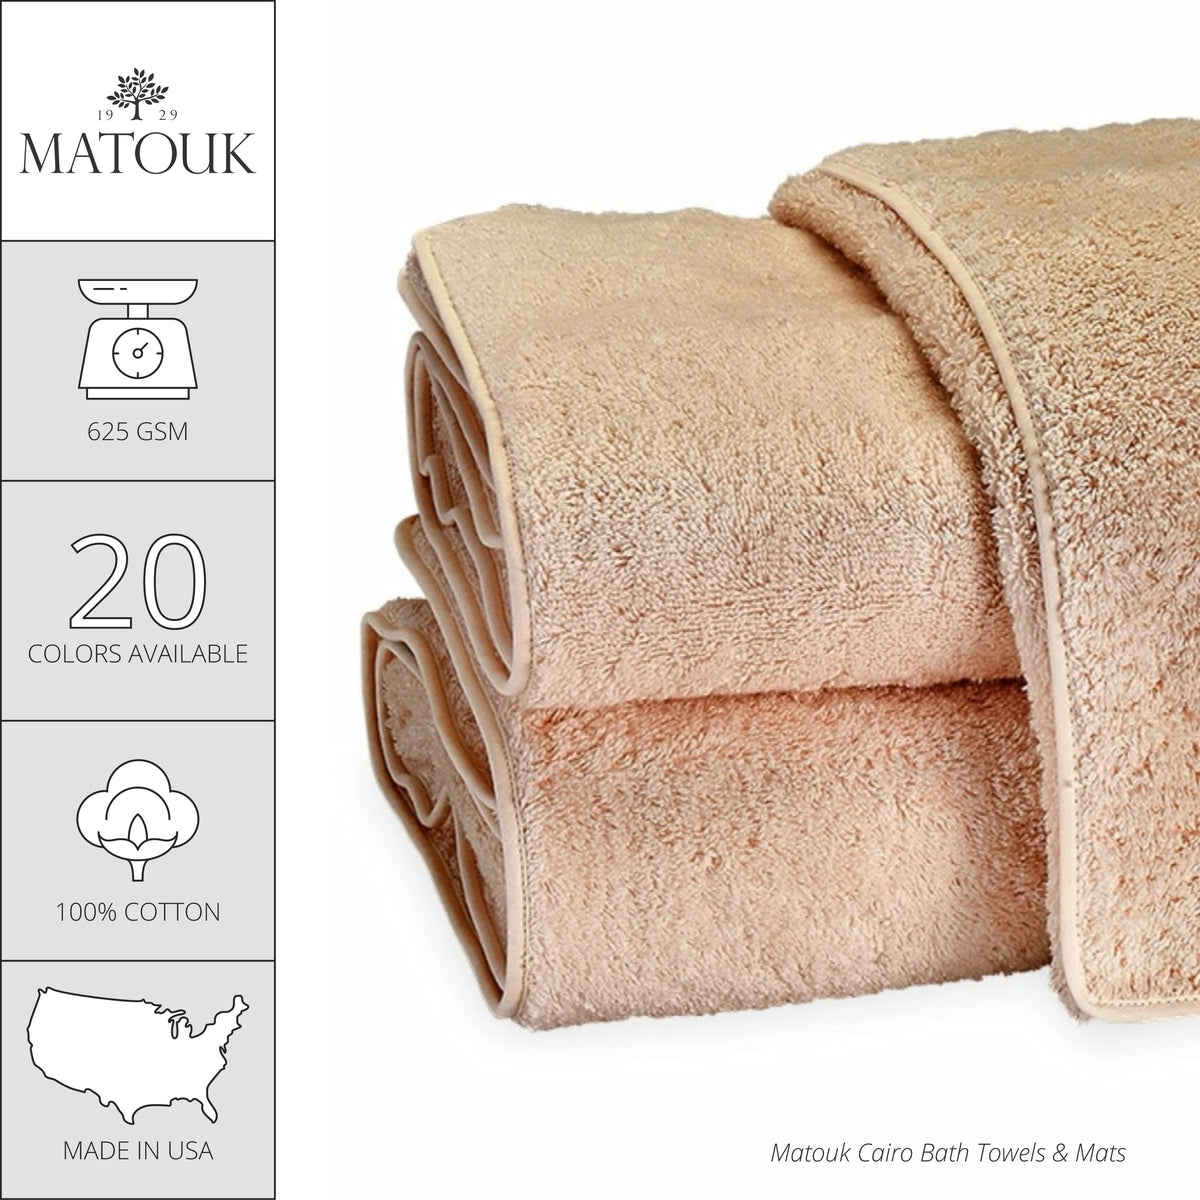 Matouk Cairo Bath Towels and Mats - Pool/Pool